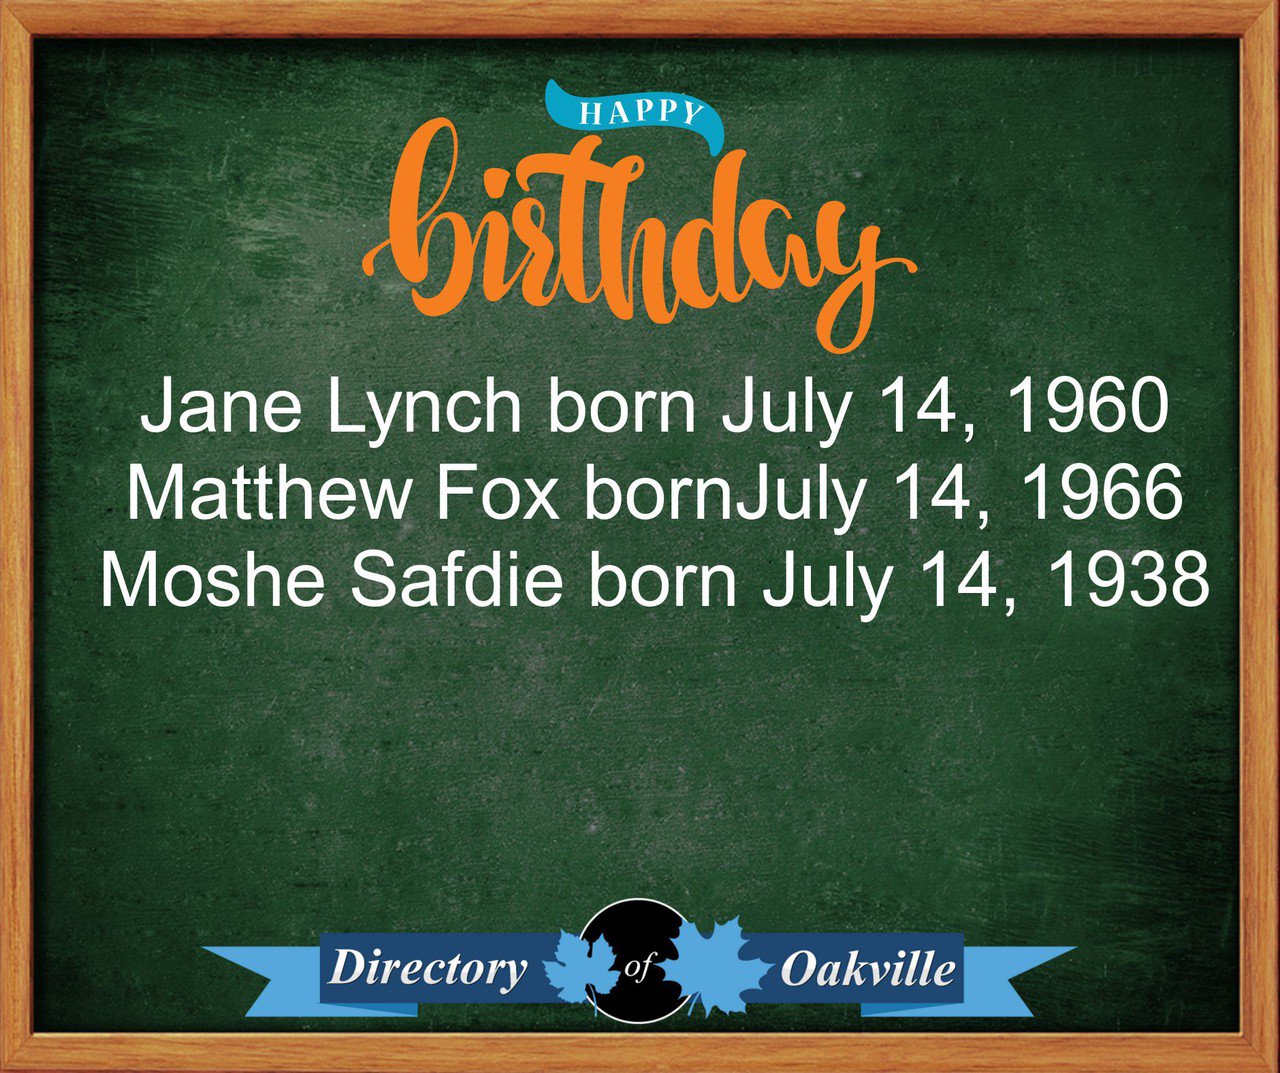 Happy Birthday!
Jane Lynch born July 14, 1960
Matthew Fox bornJuly 14, 1966
Moshe Safdie born July 14, 1938 